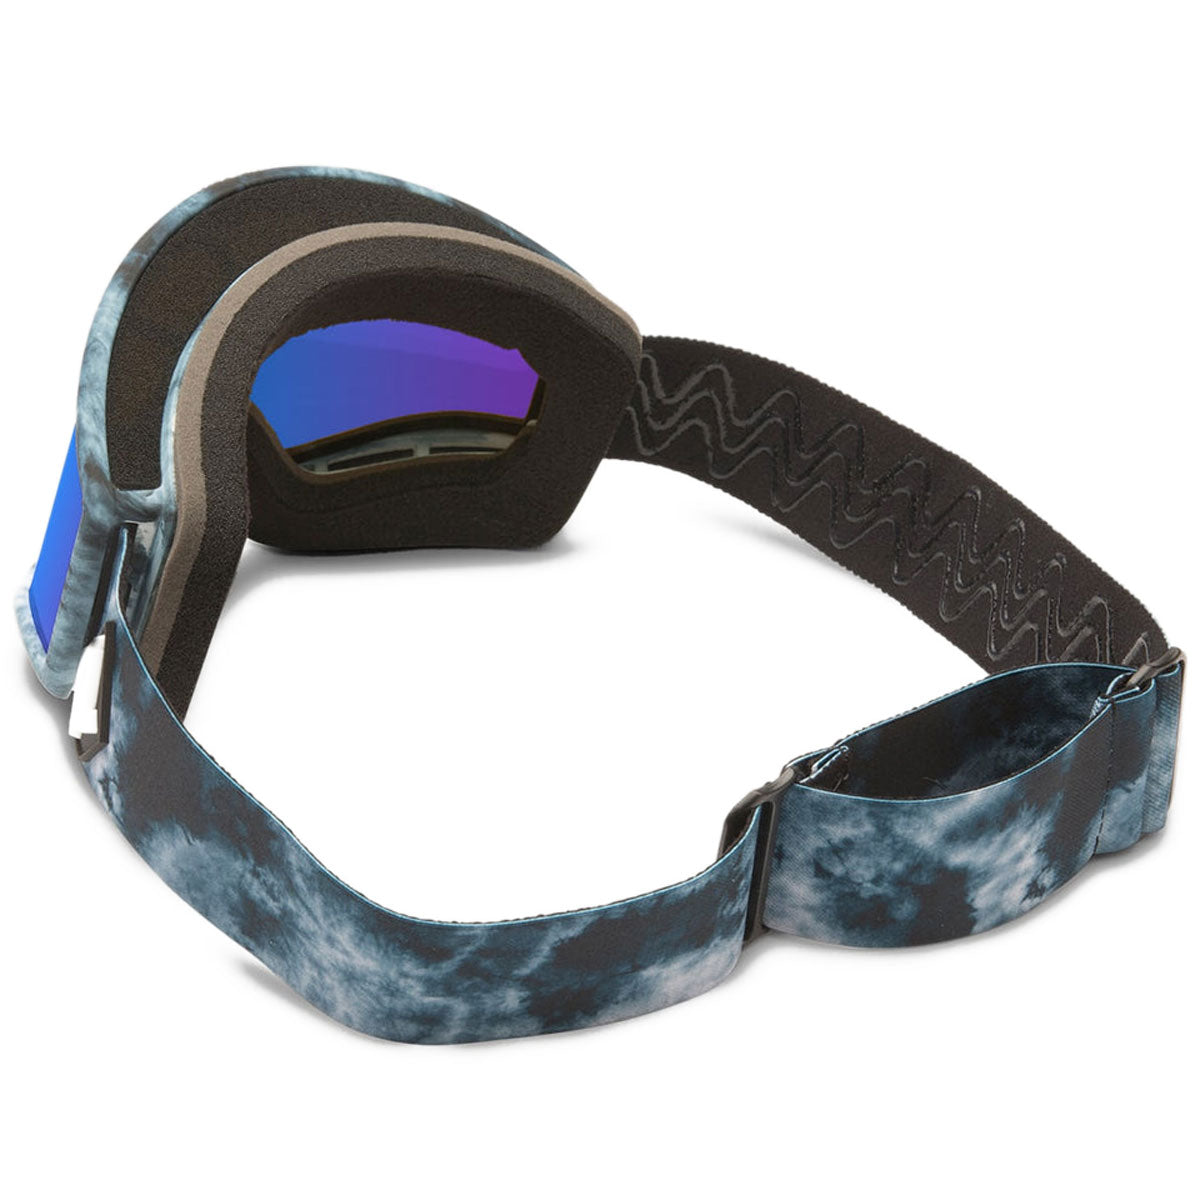 Volcom Yae Snowboard Goggles - Lagoon/Blue Chrome image 4